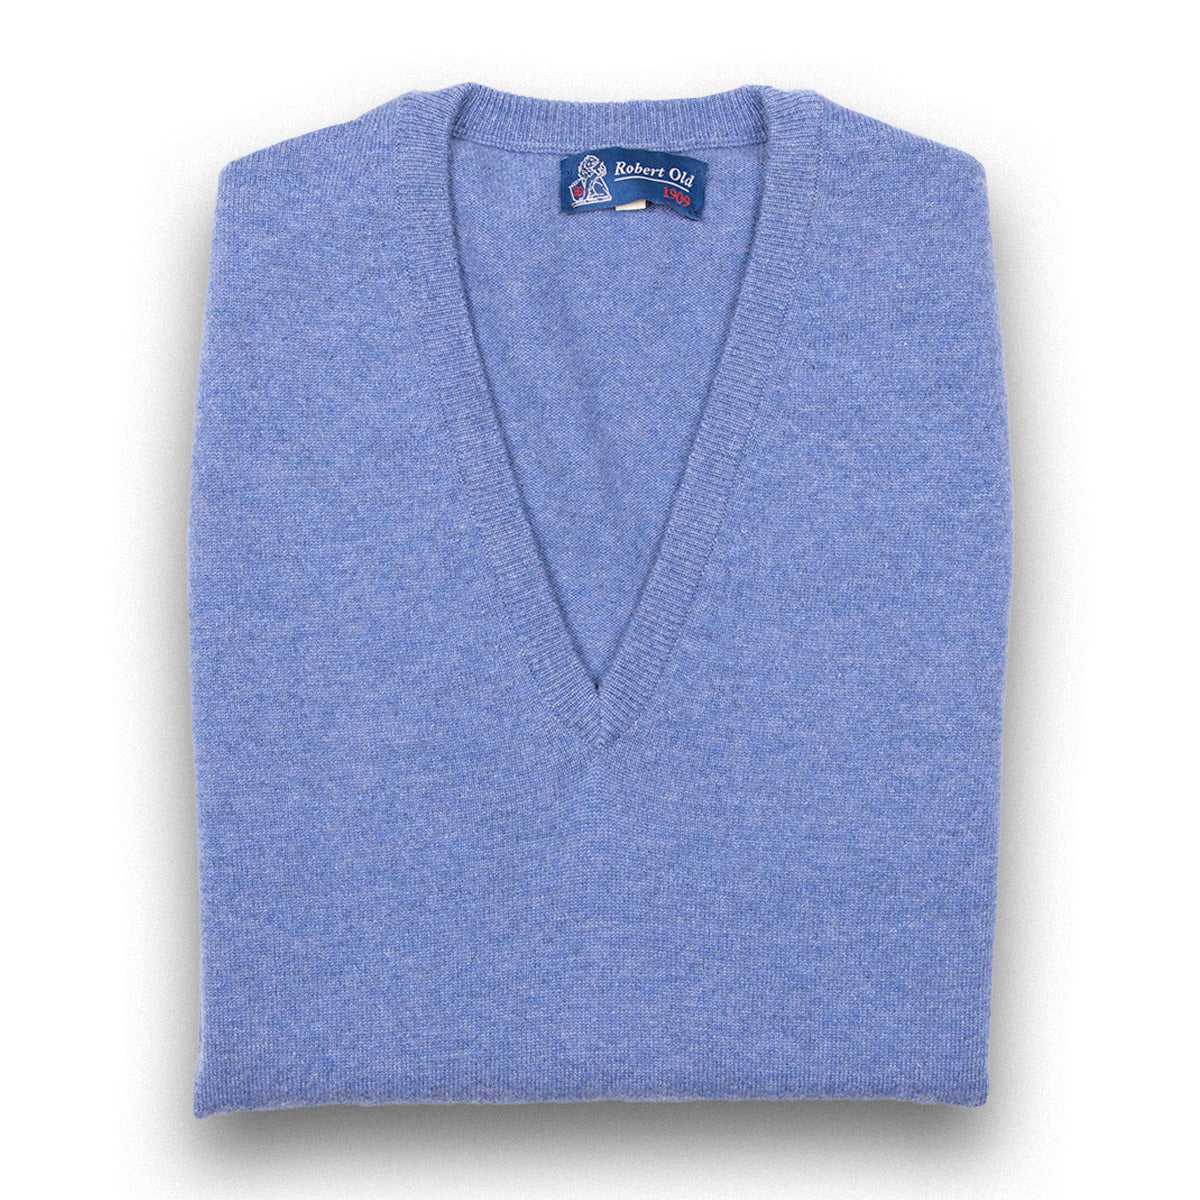 Lapis Blue Blenheim Cashmere Sleeveless V-Neck Sweater  Robert Old Lapis Blue UK 36" 